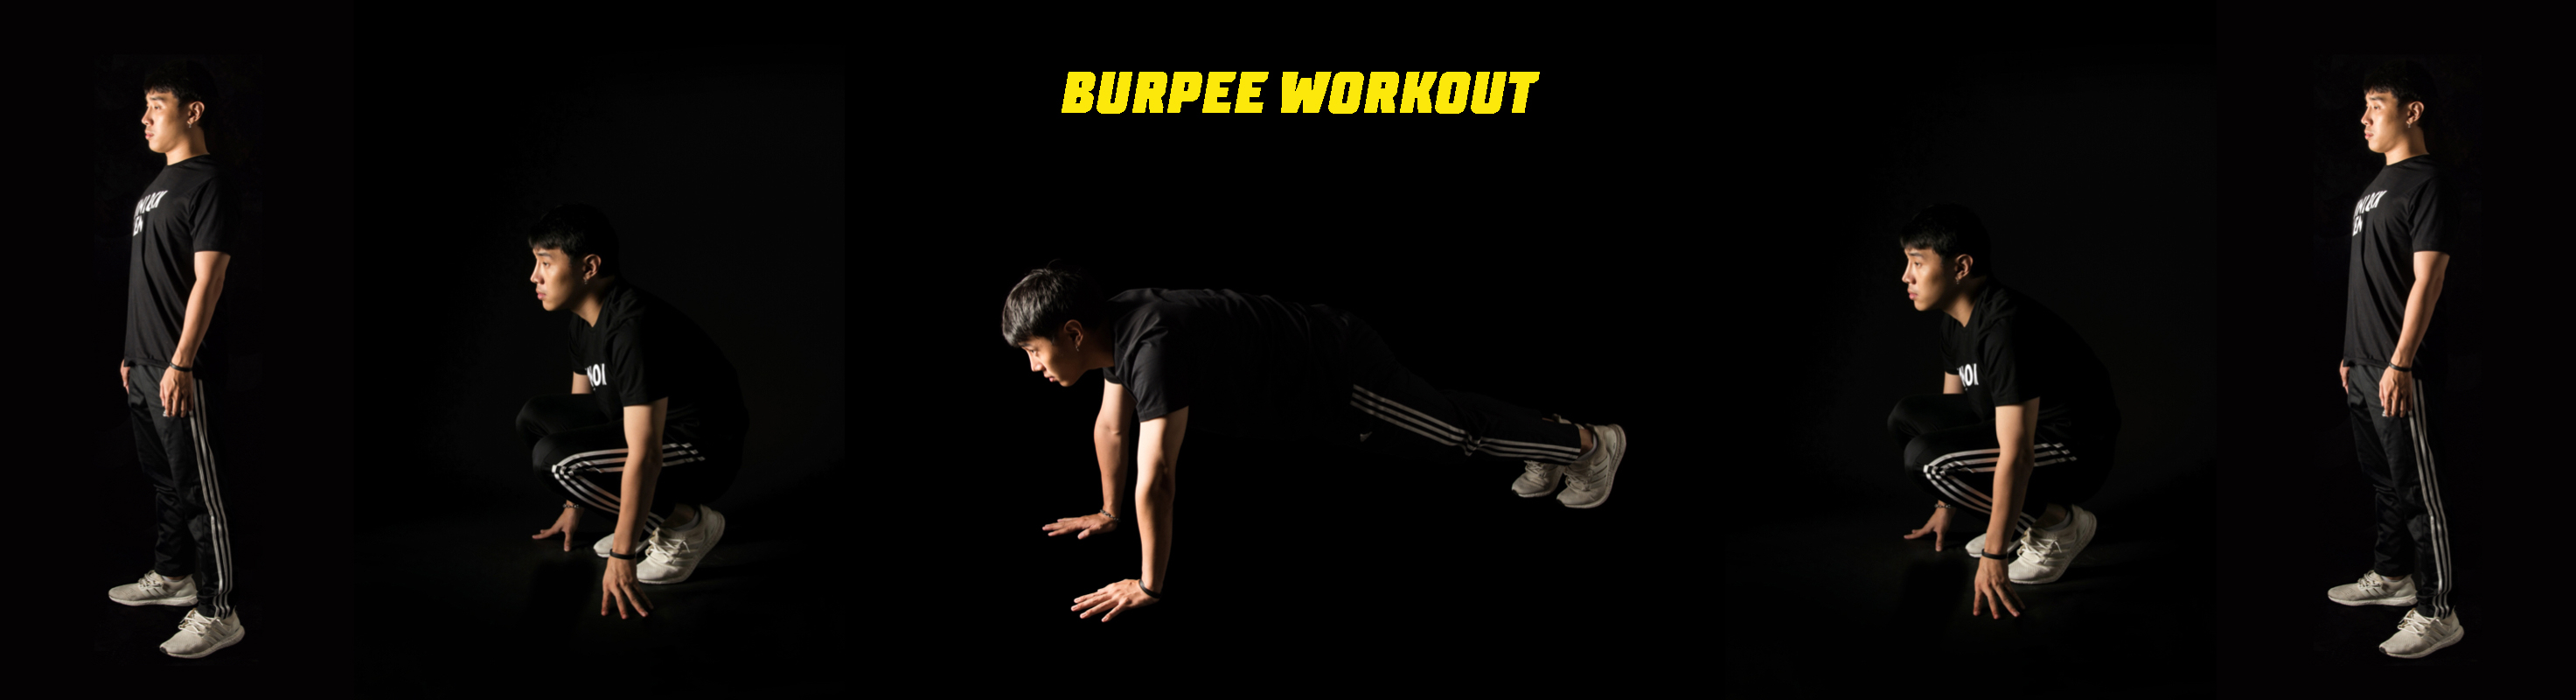 170309-Burpee-Workout-Challenge-2